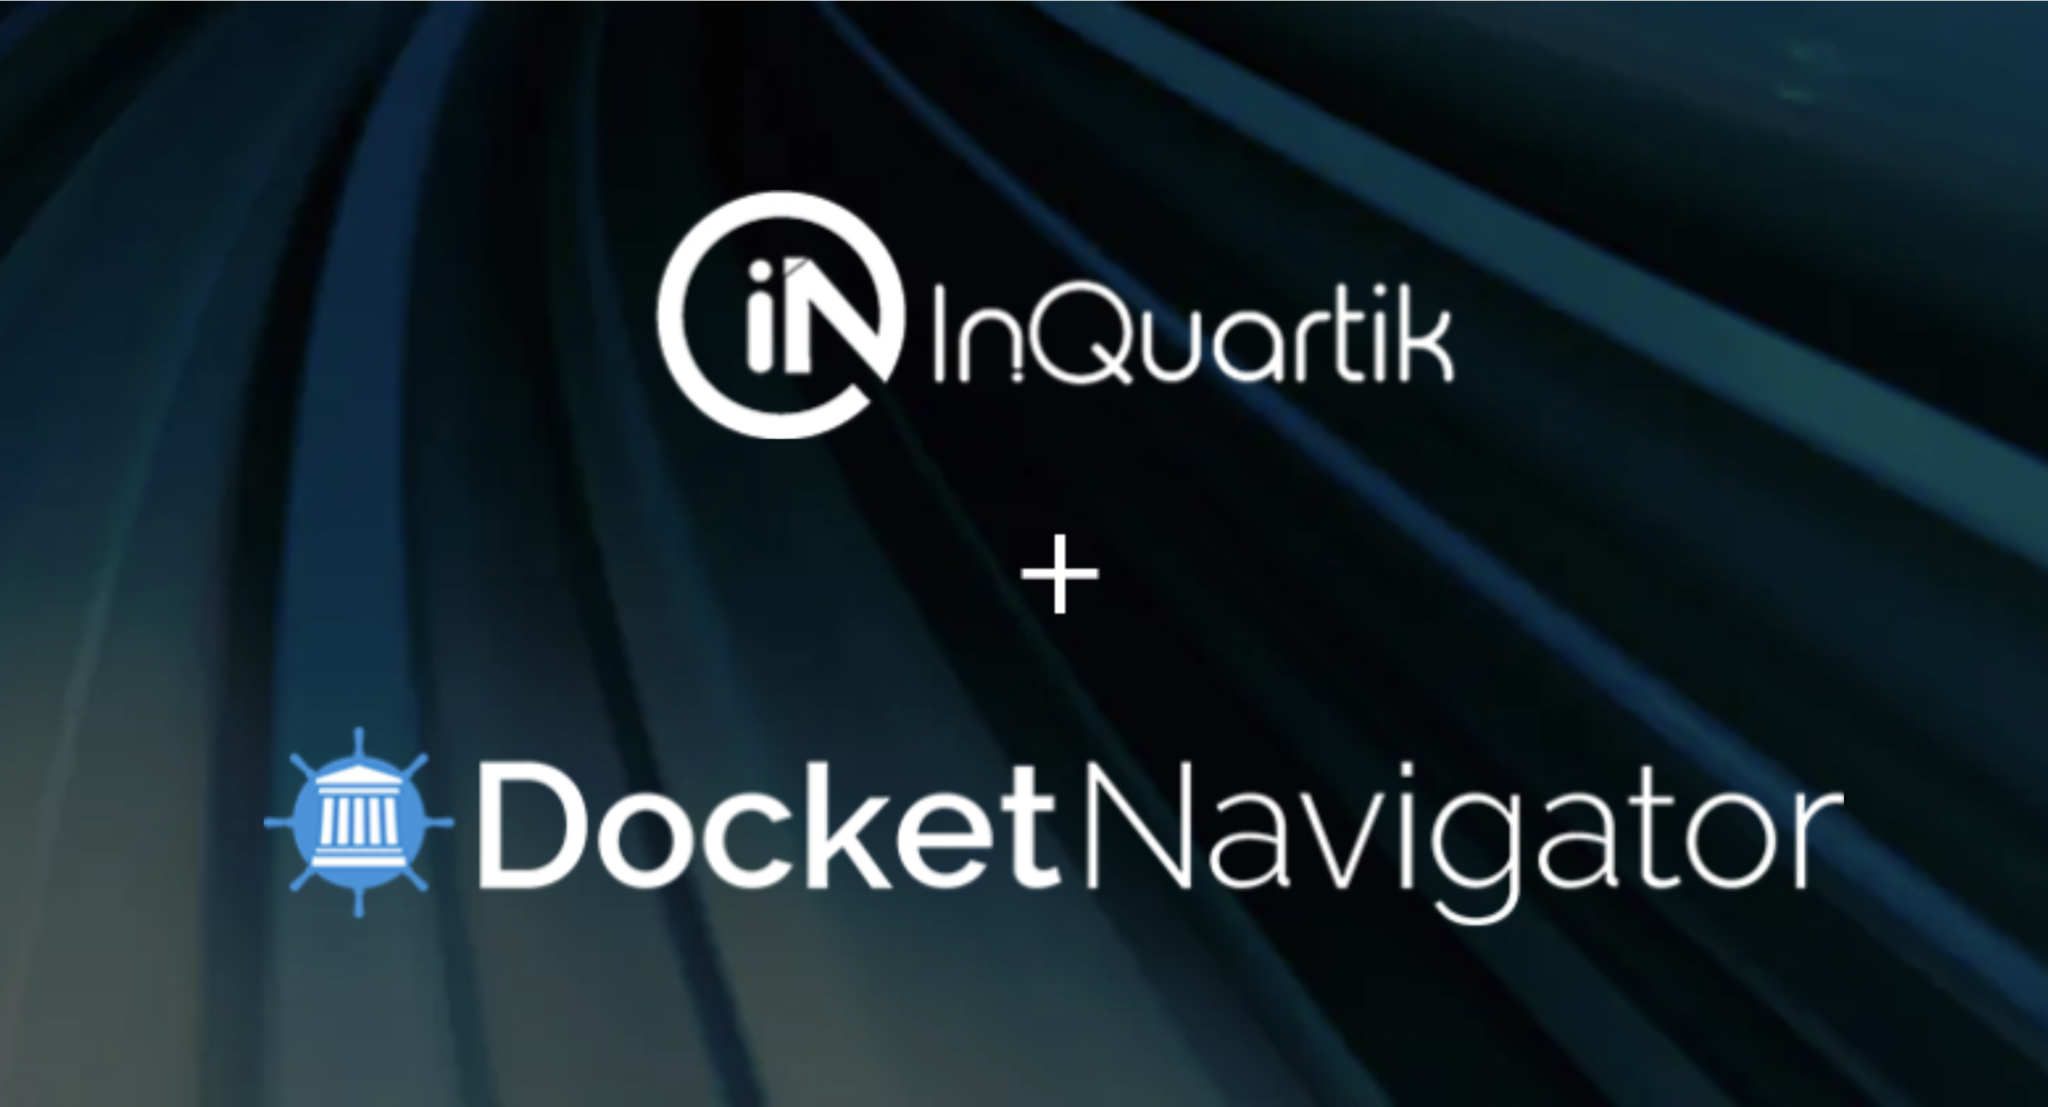 InQuartik Corporation to Partner With Docket Navigator to Provide On-Platform Patent Analysis Capabilities